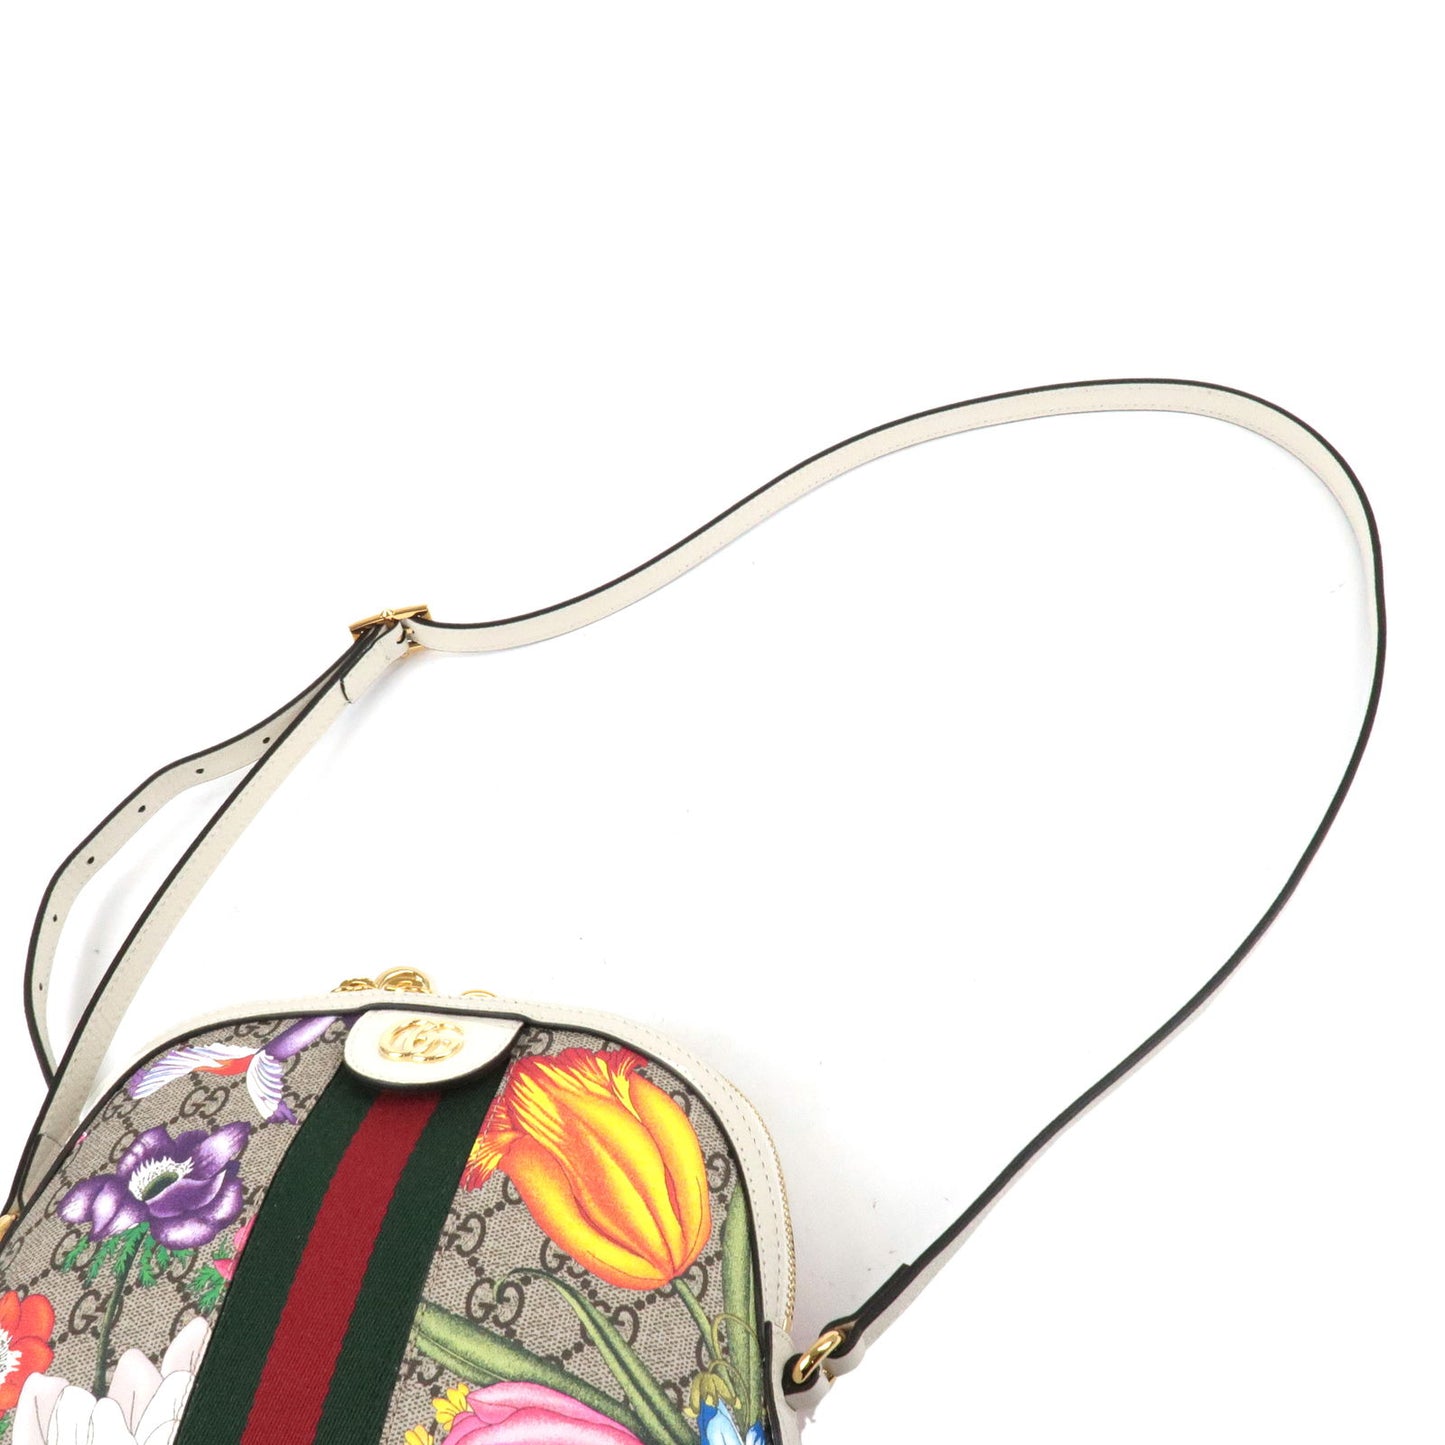 GUCCI Ophidia GG Flora PVC Leather Shoulder Bag Multi Color 499621